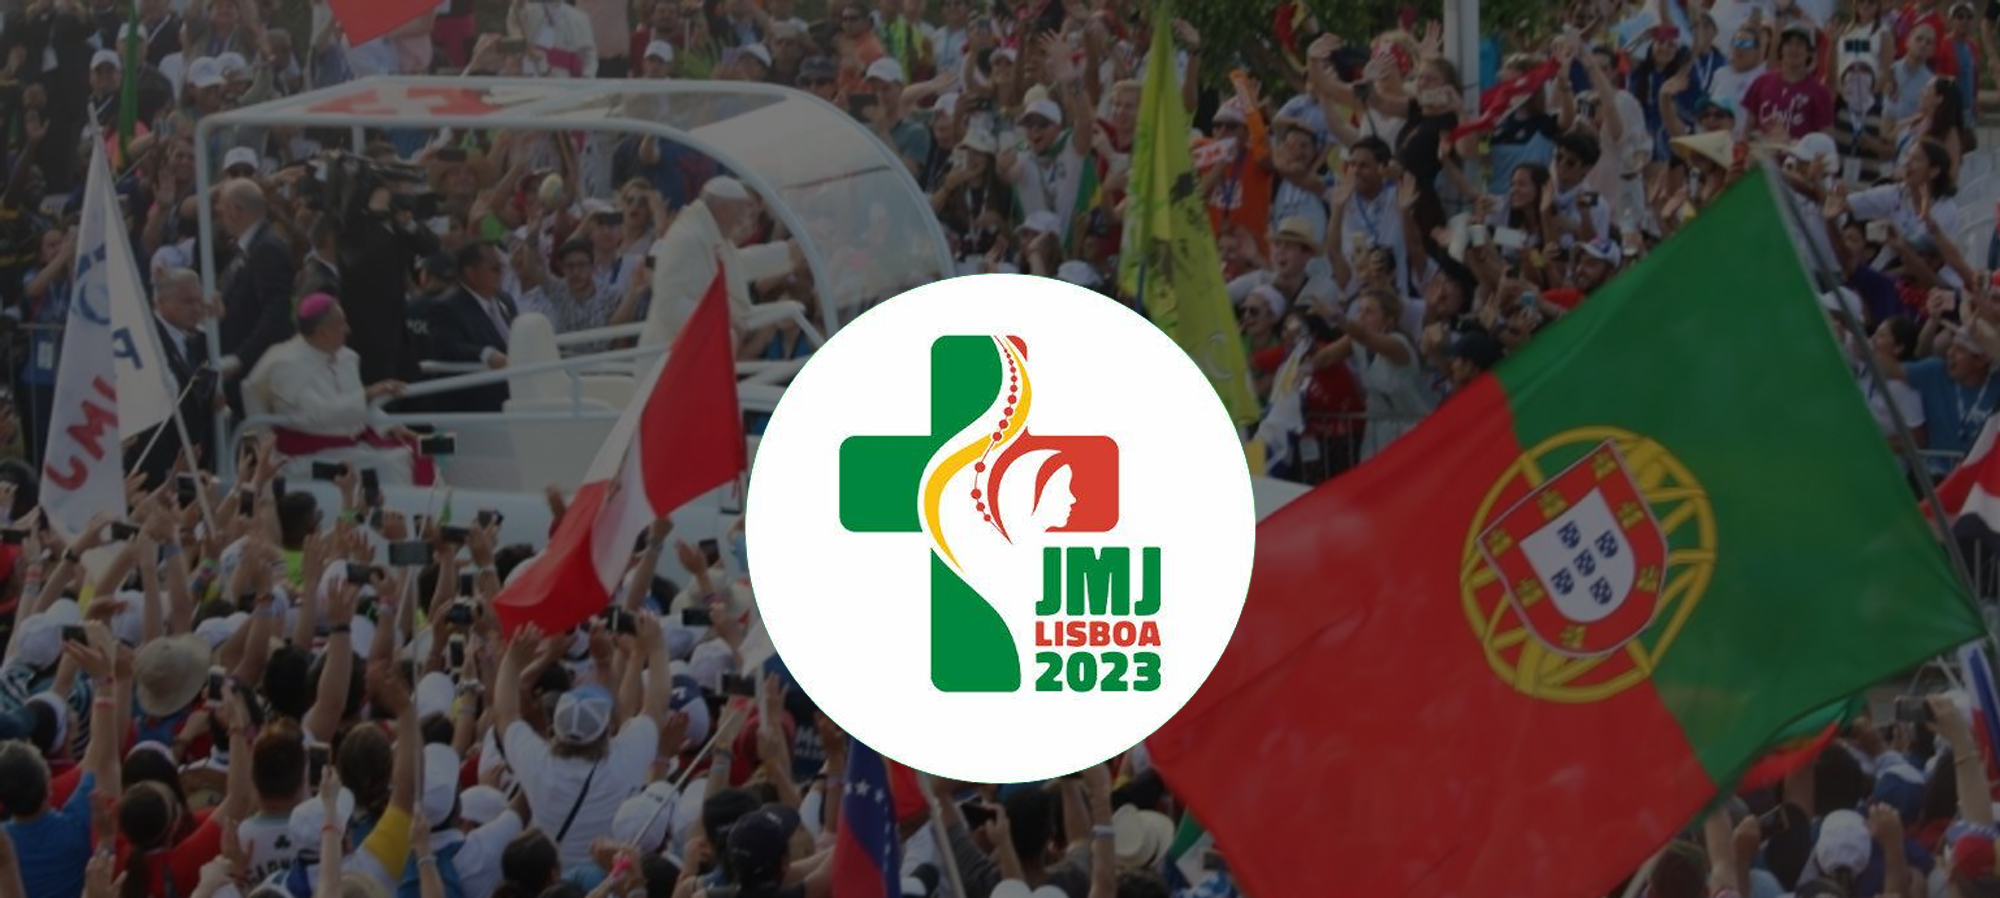 JORNADA MUNDIAL DE LA JUVENTUD 2023 - LISBOA